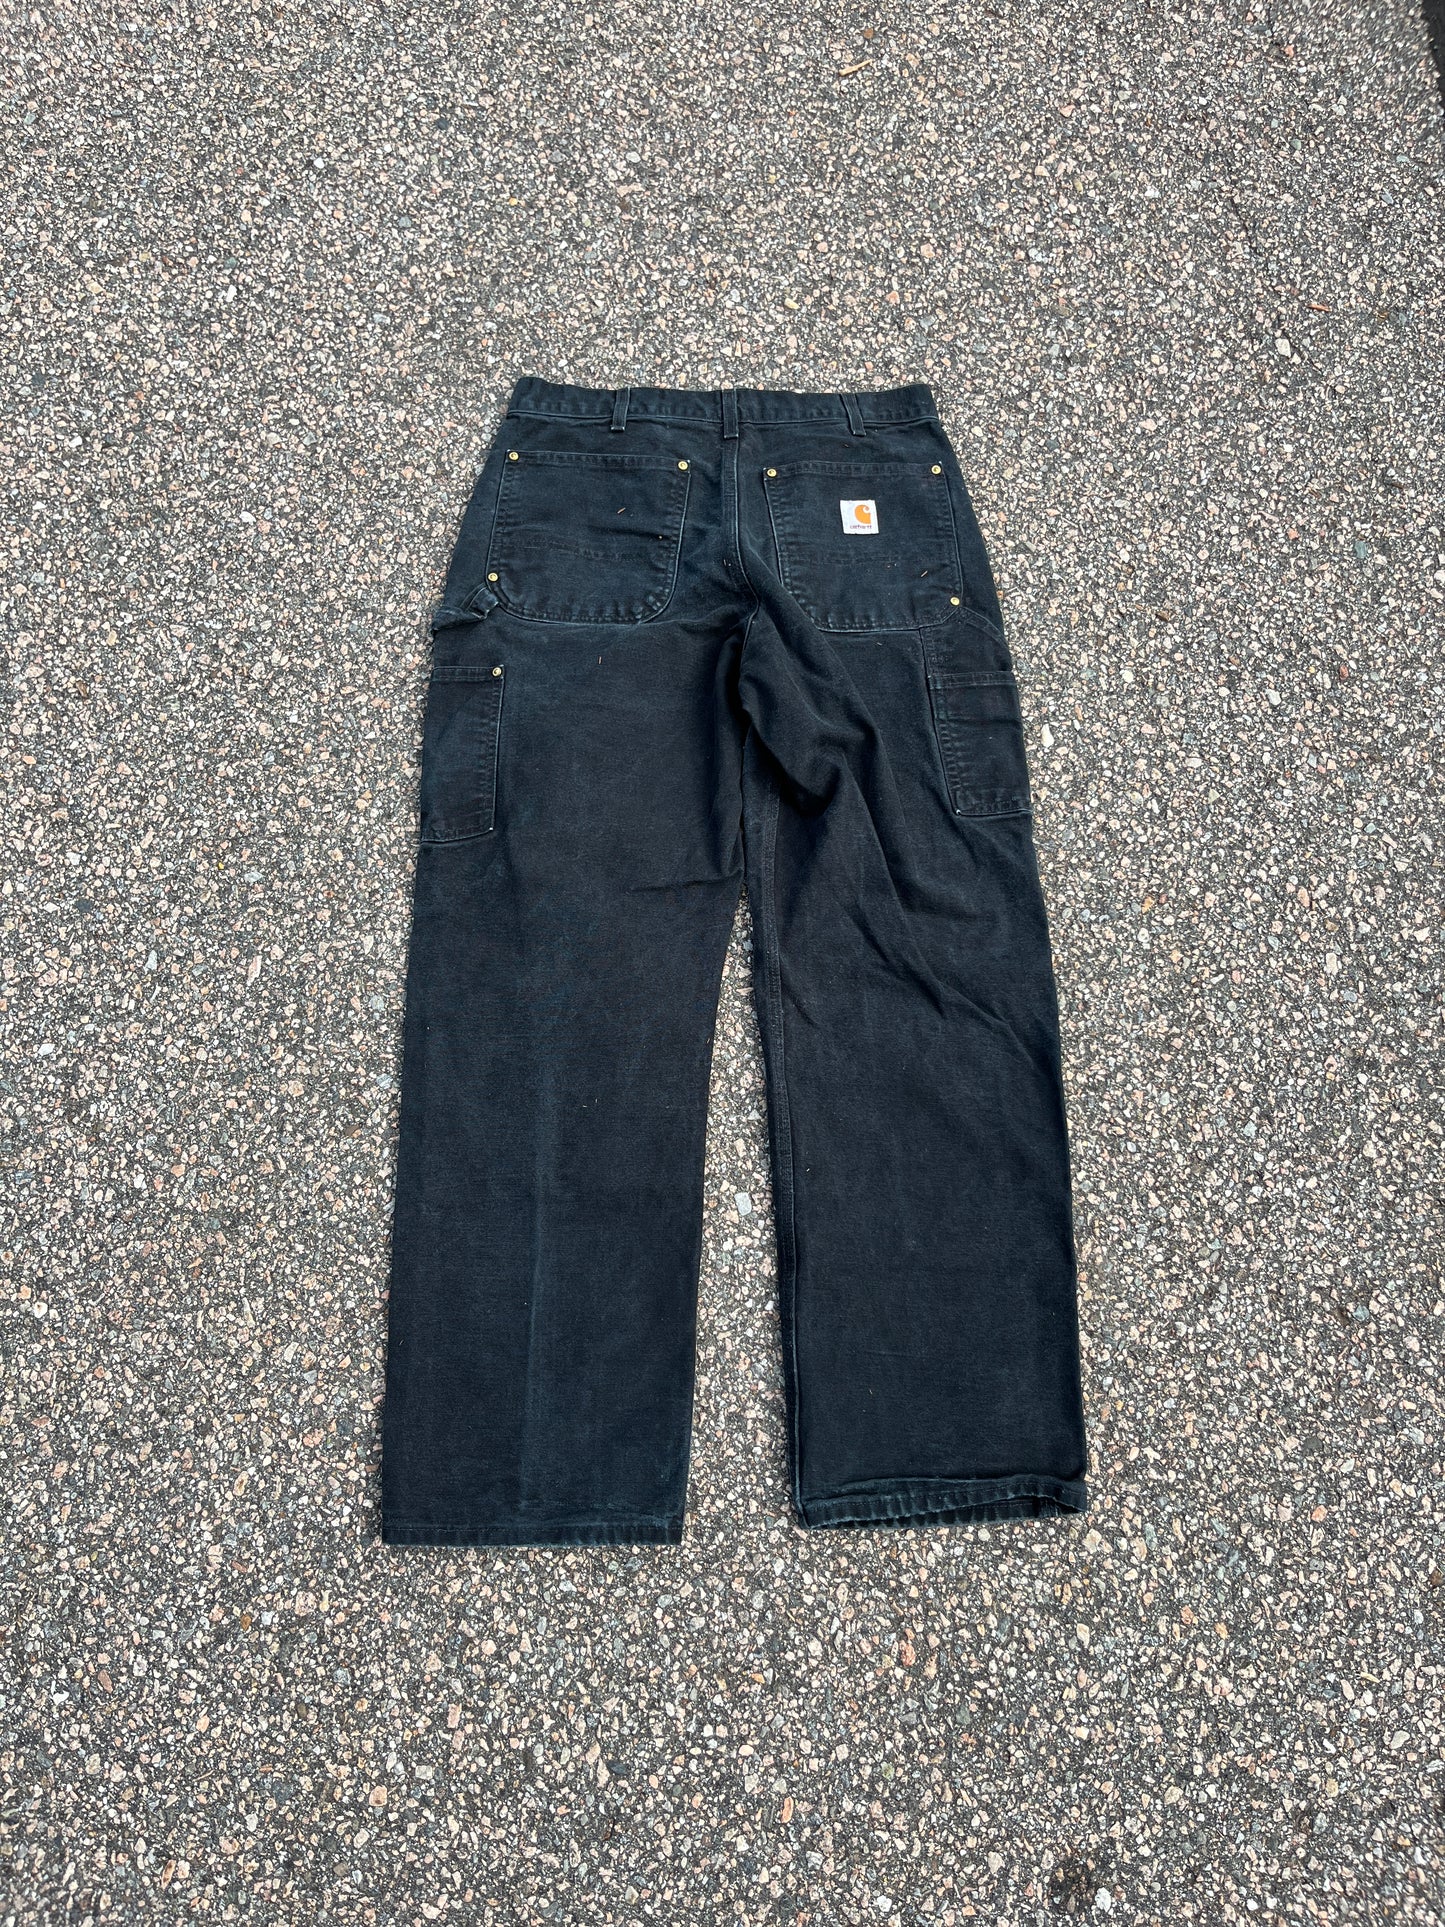 Faded Black Carhartt Double Knee Pants - 30 x 29